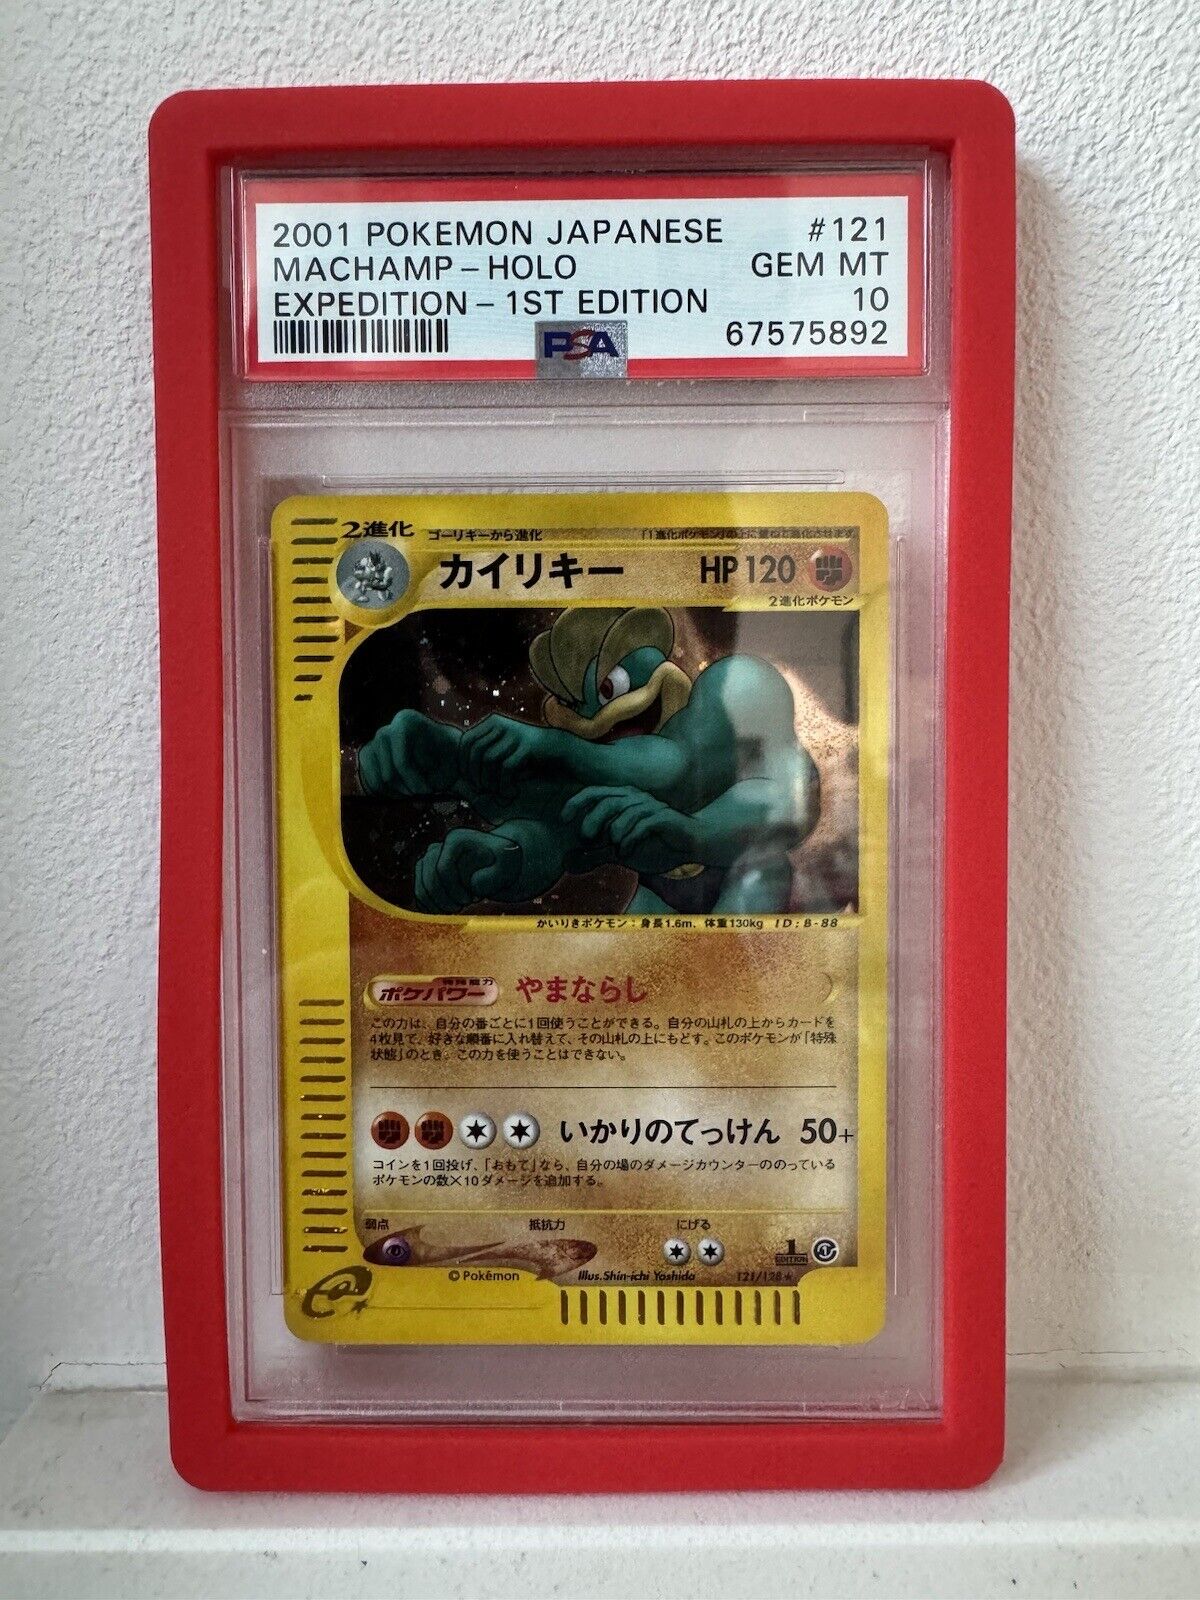 2001 Pokemon Japanese Expedition 1st Edition Machamp Holo 121 PSA 10